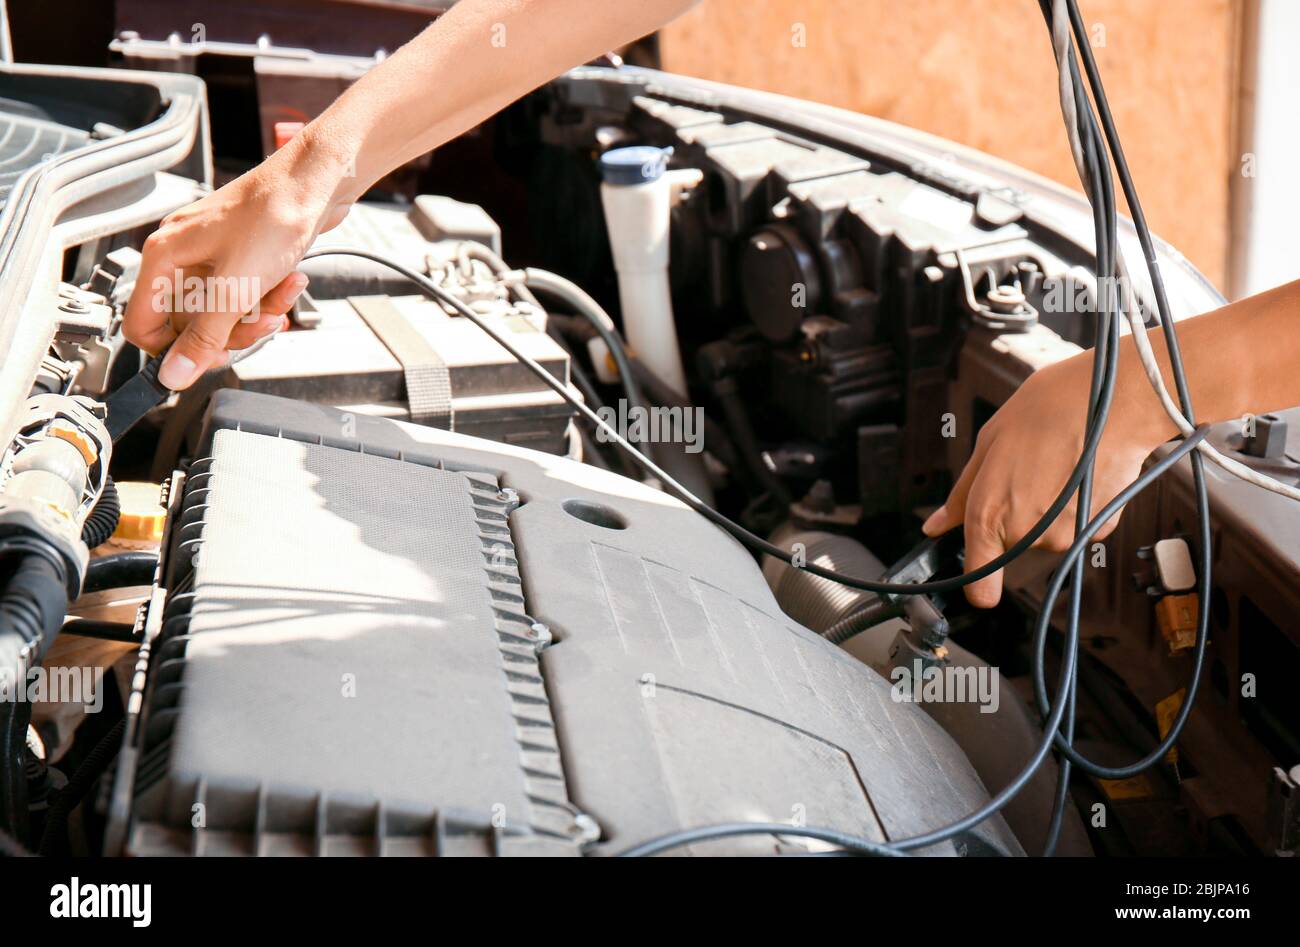 Young female mechanic repairing car in body shop Stock Photo